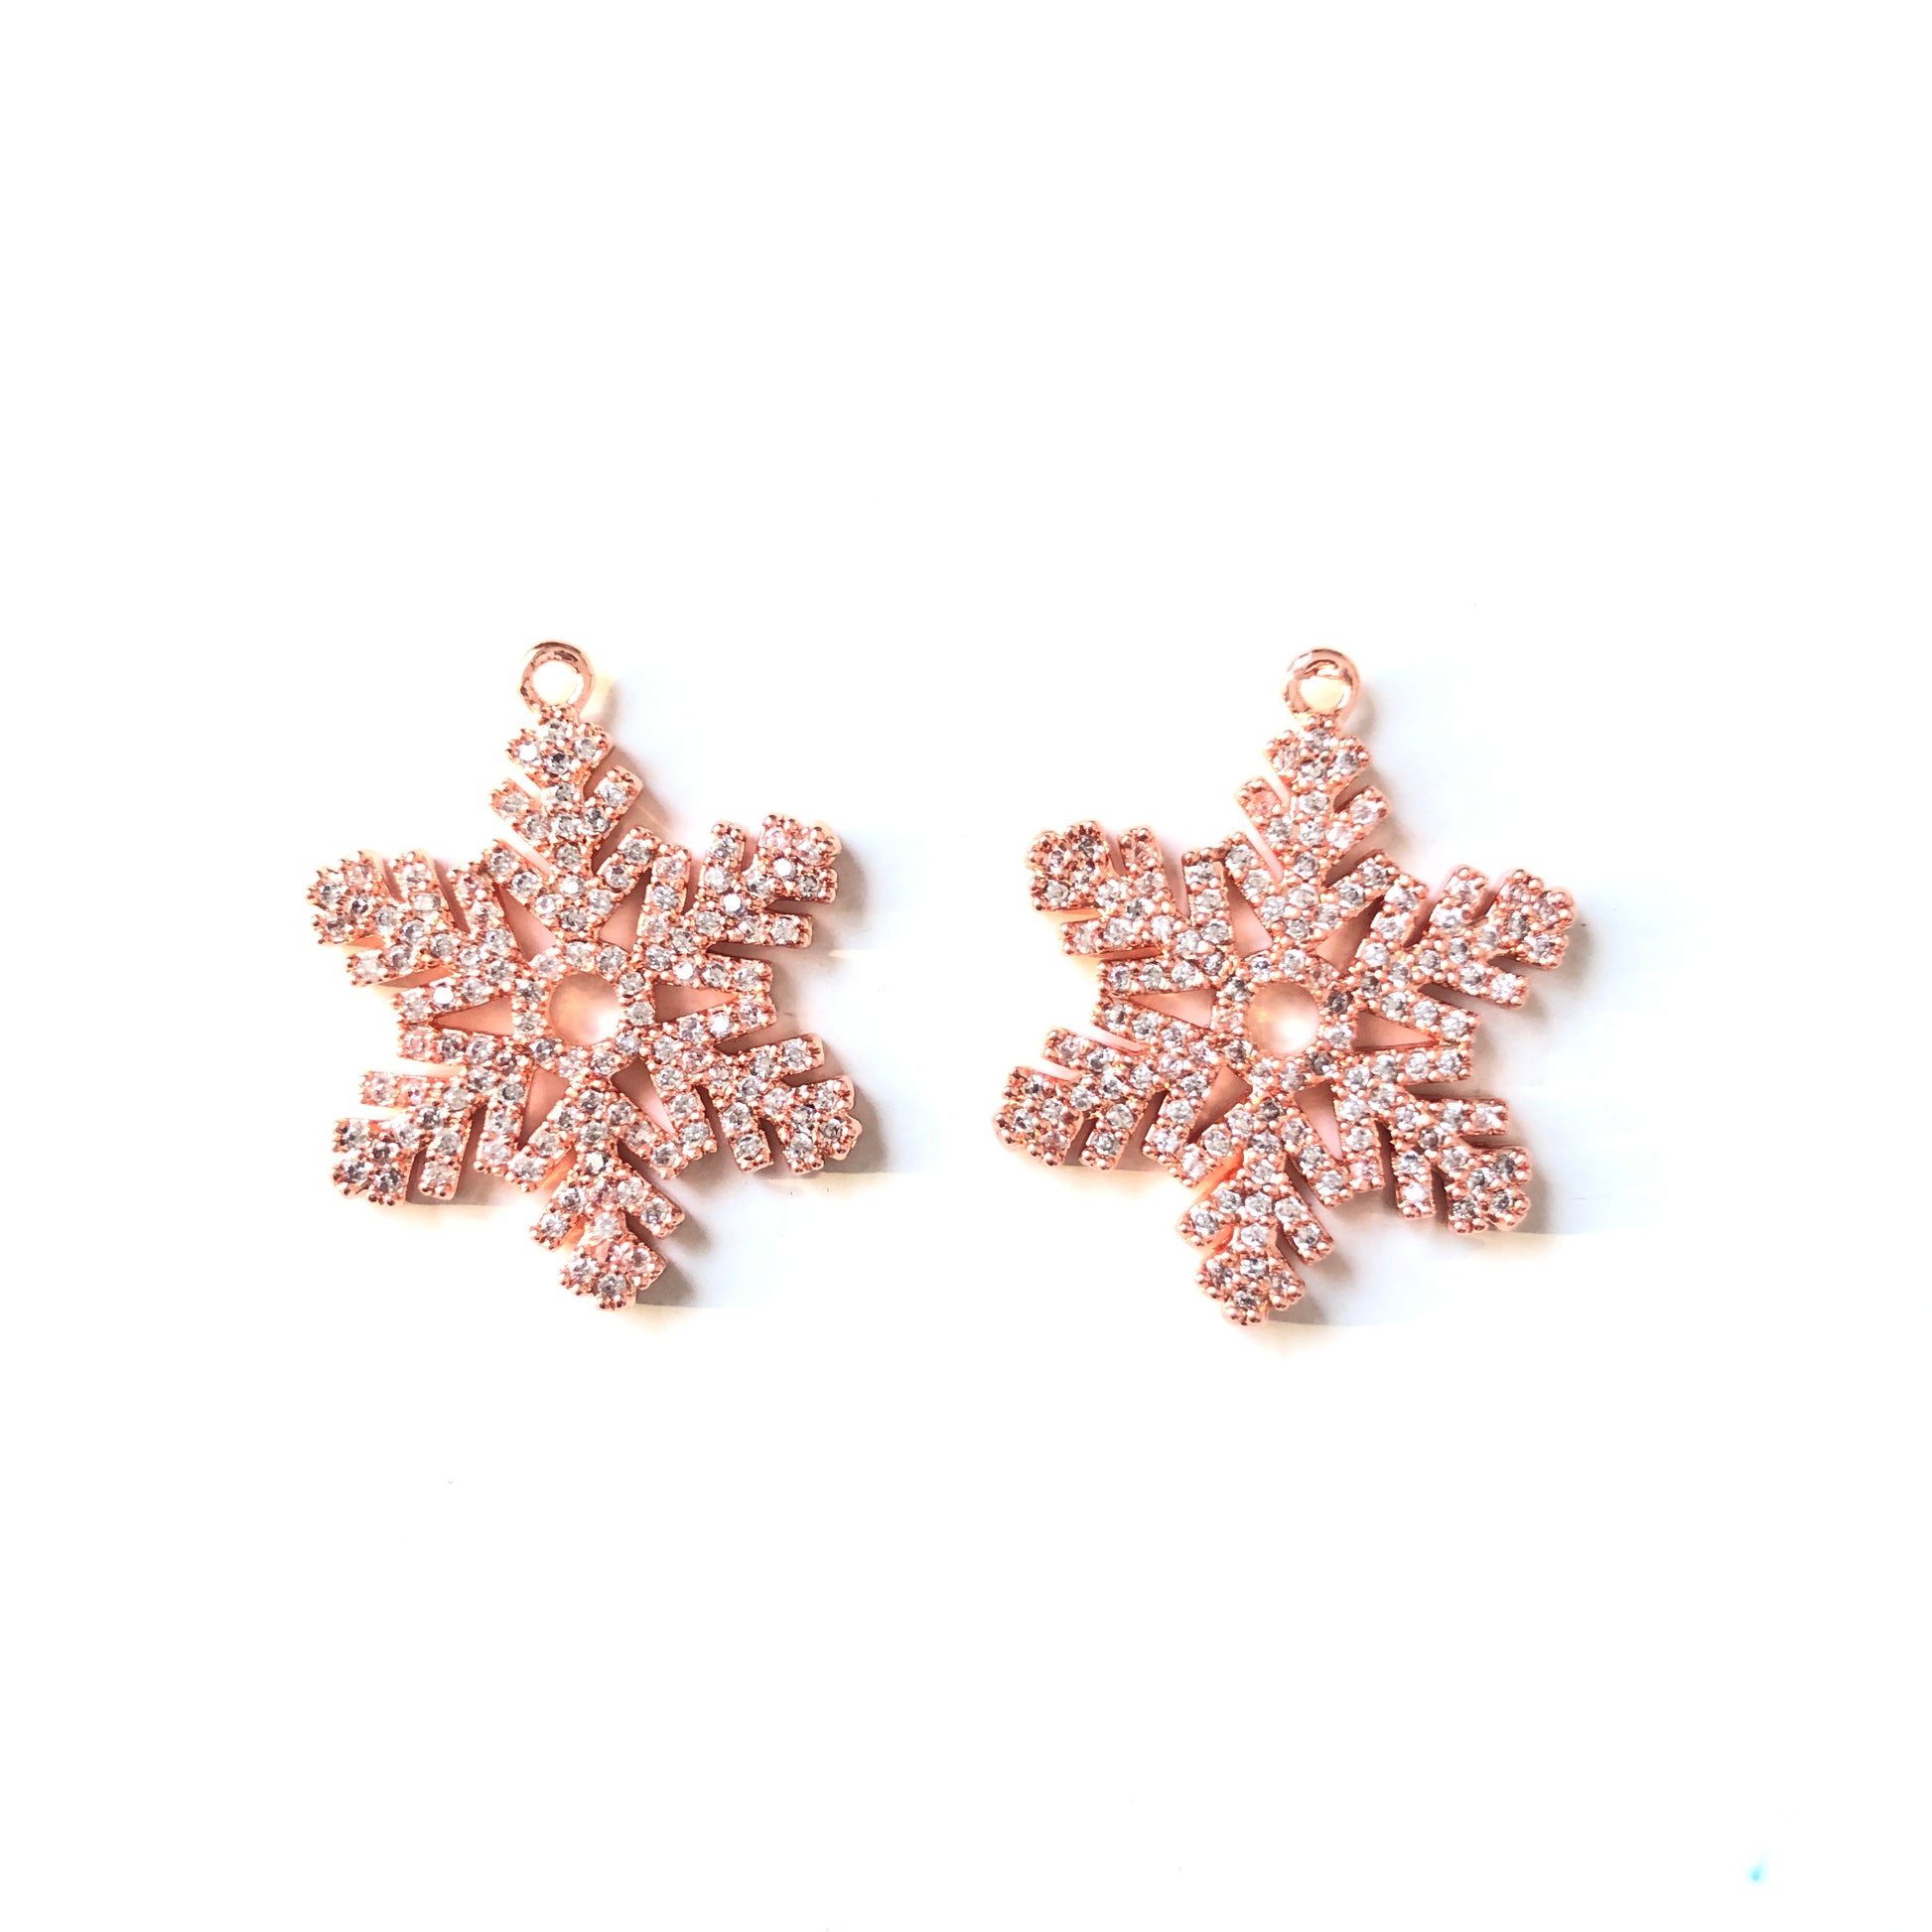 10pcs/lot 22*20mm CZ Paved Snowflakes Charms Rose Gold CZ Paved Charms Christmas On Sale Charms Beads Beyond